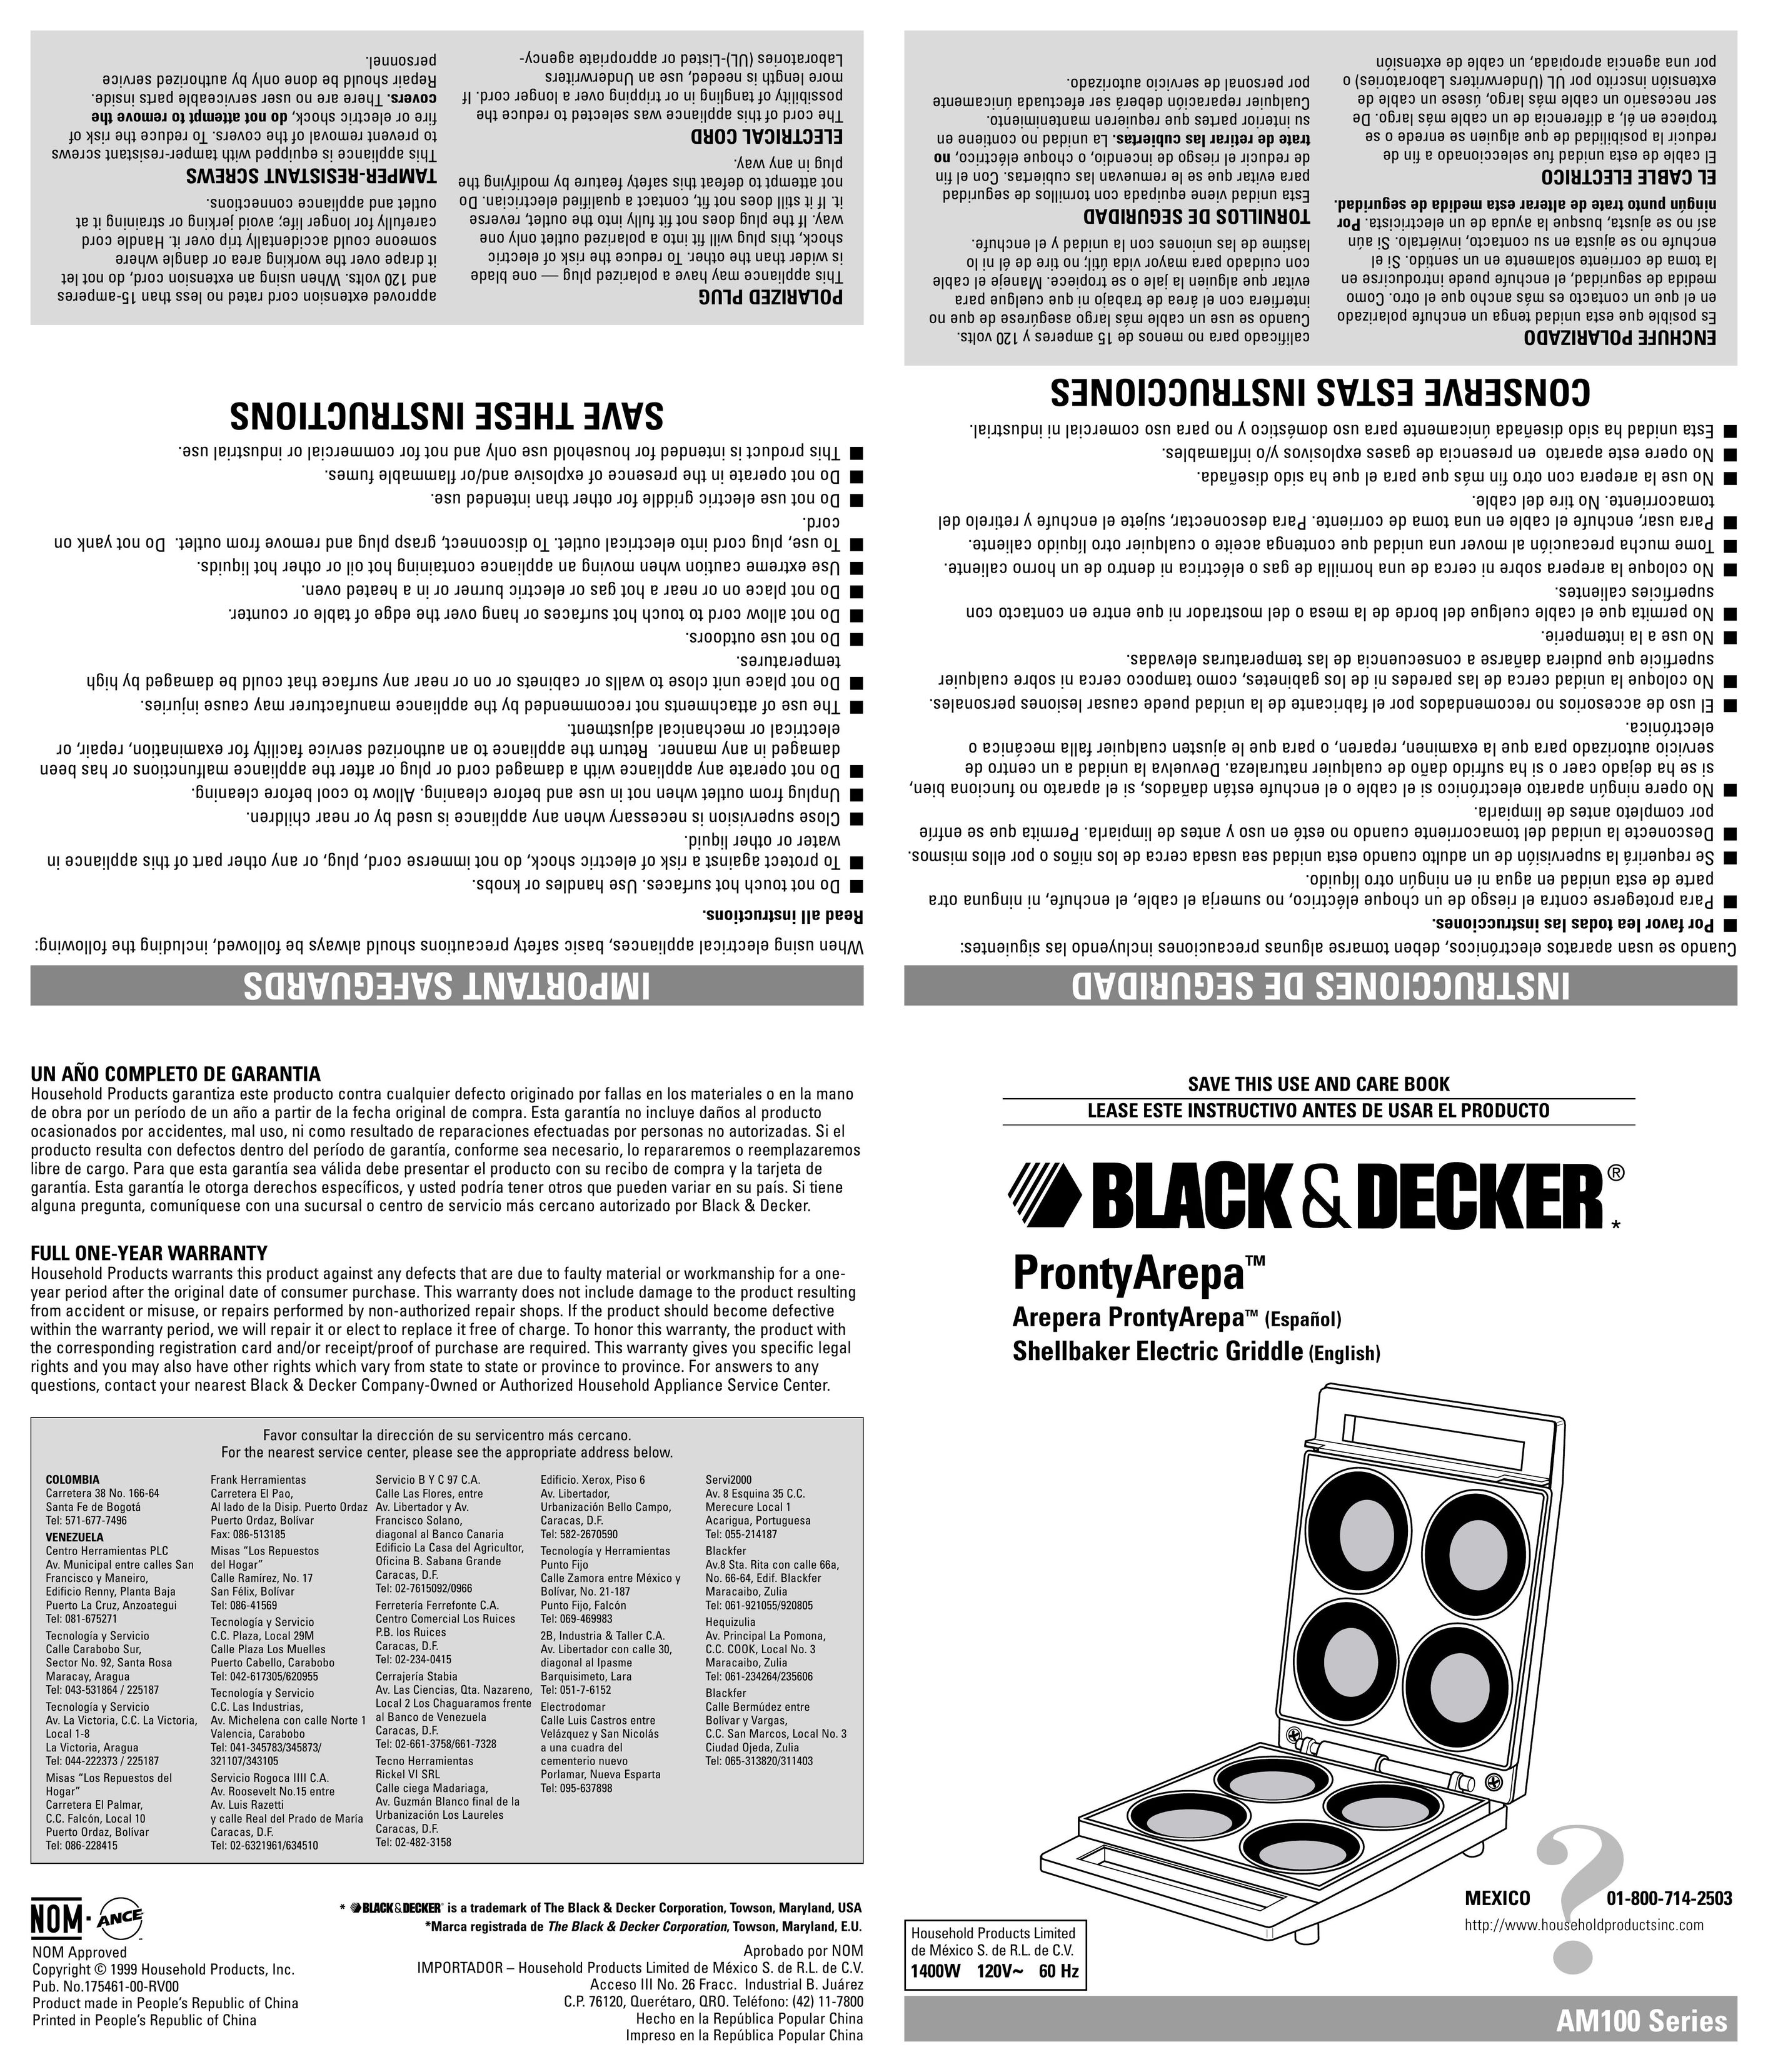 Black & Decker AM100 Series Griddle User Manual